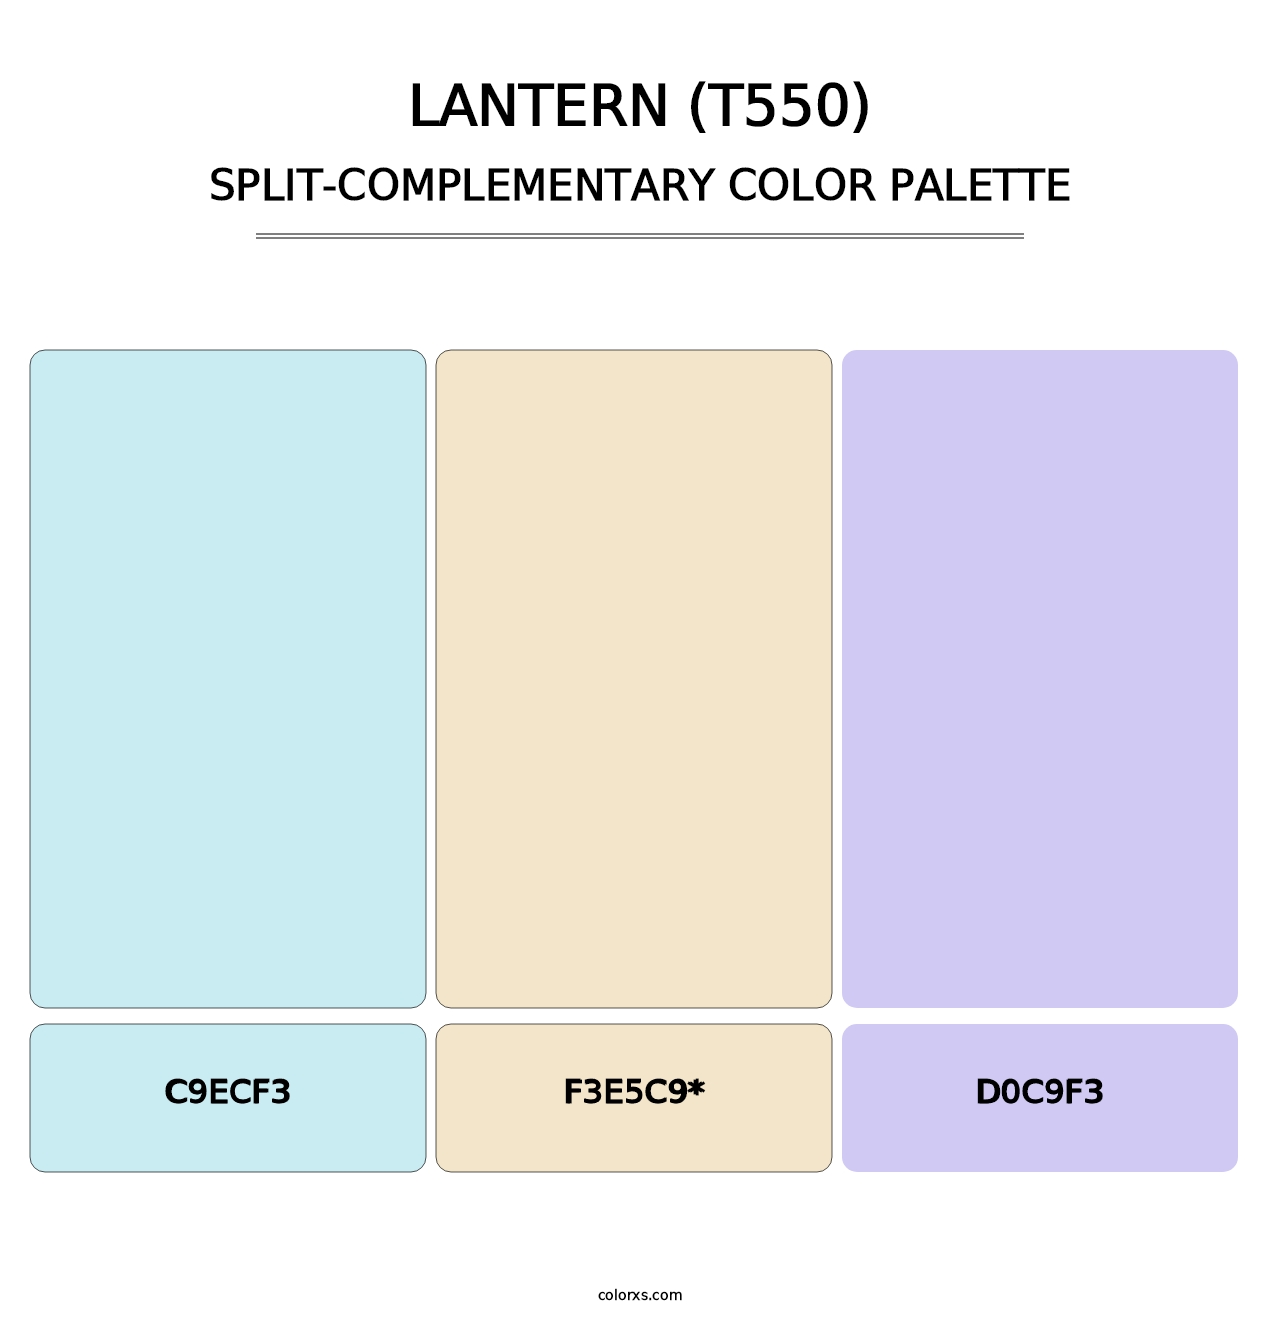 Lantern (T550) - Split-Complementary Color Palette